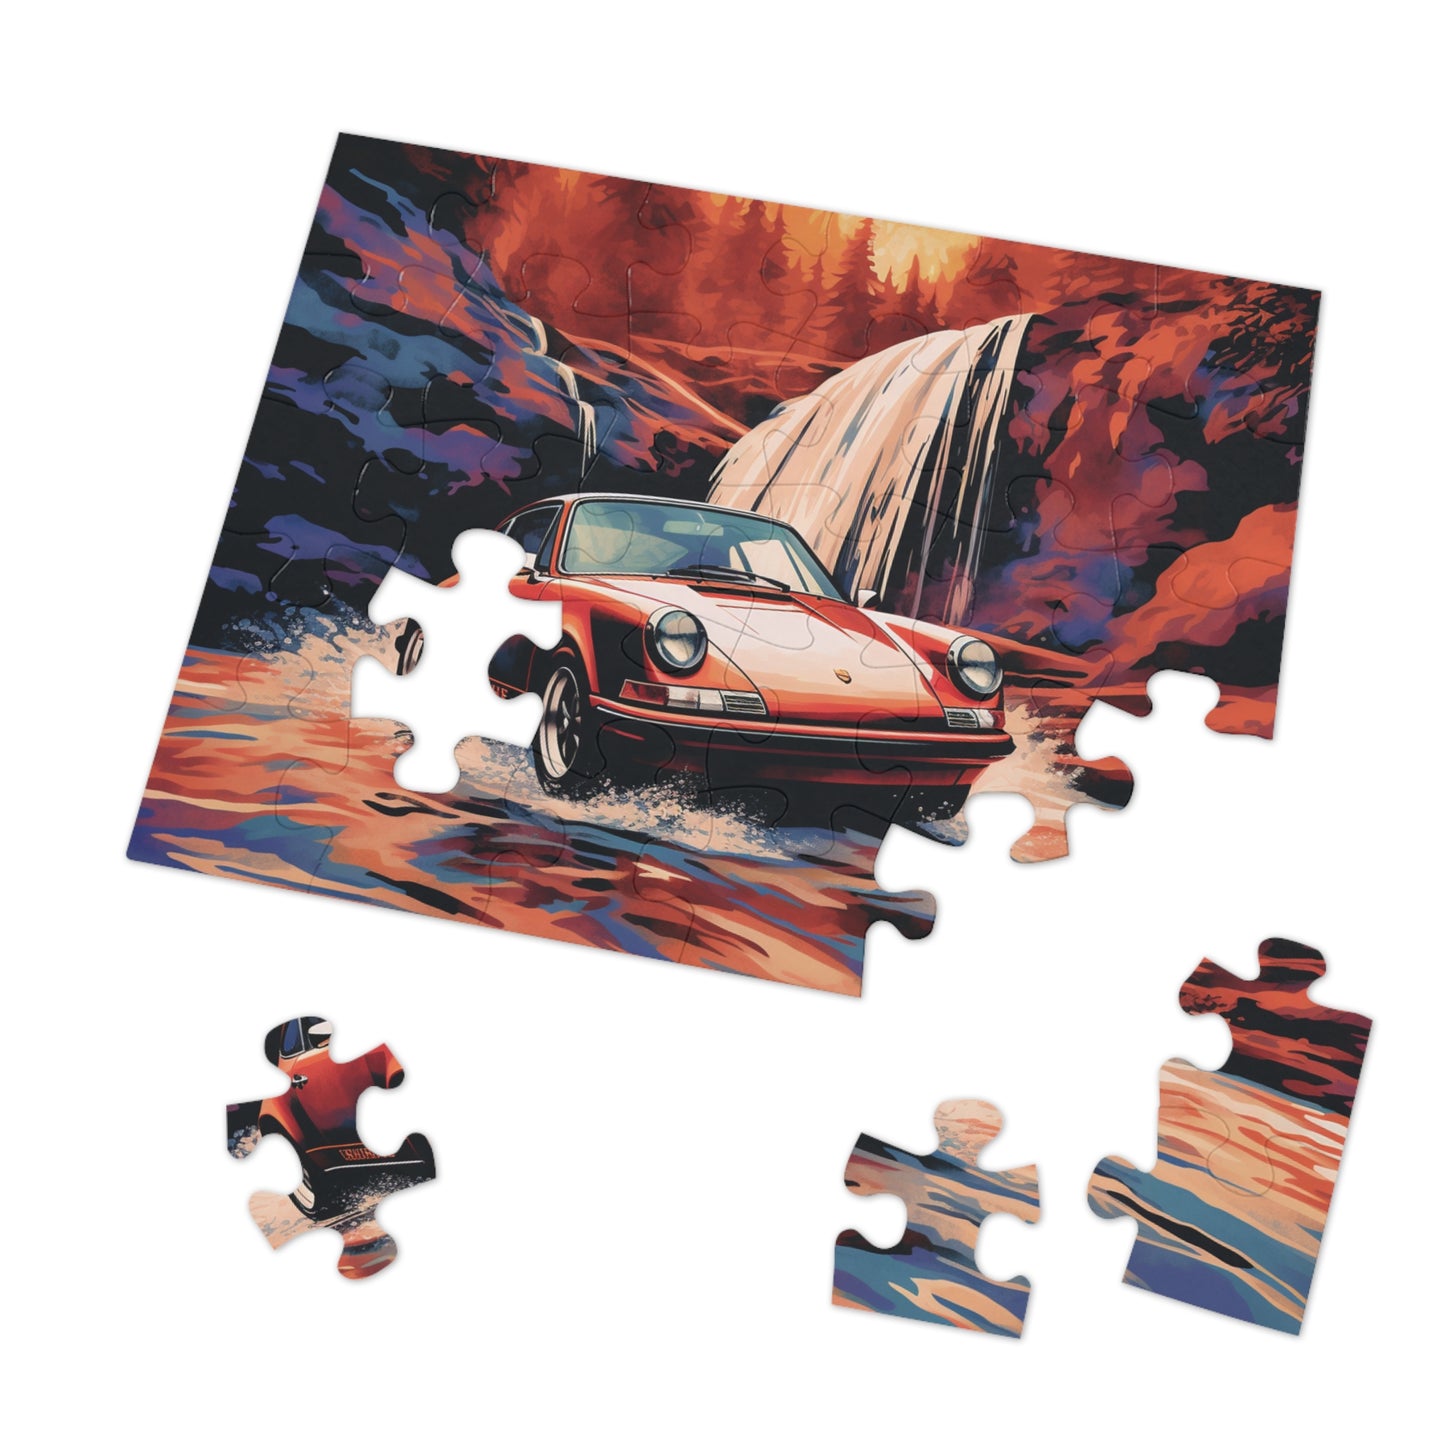 Jigsaw Puzzle (30, 110, 252, 500,1000-Piece) American Flag Porsche Abstract 4